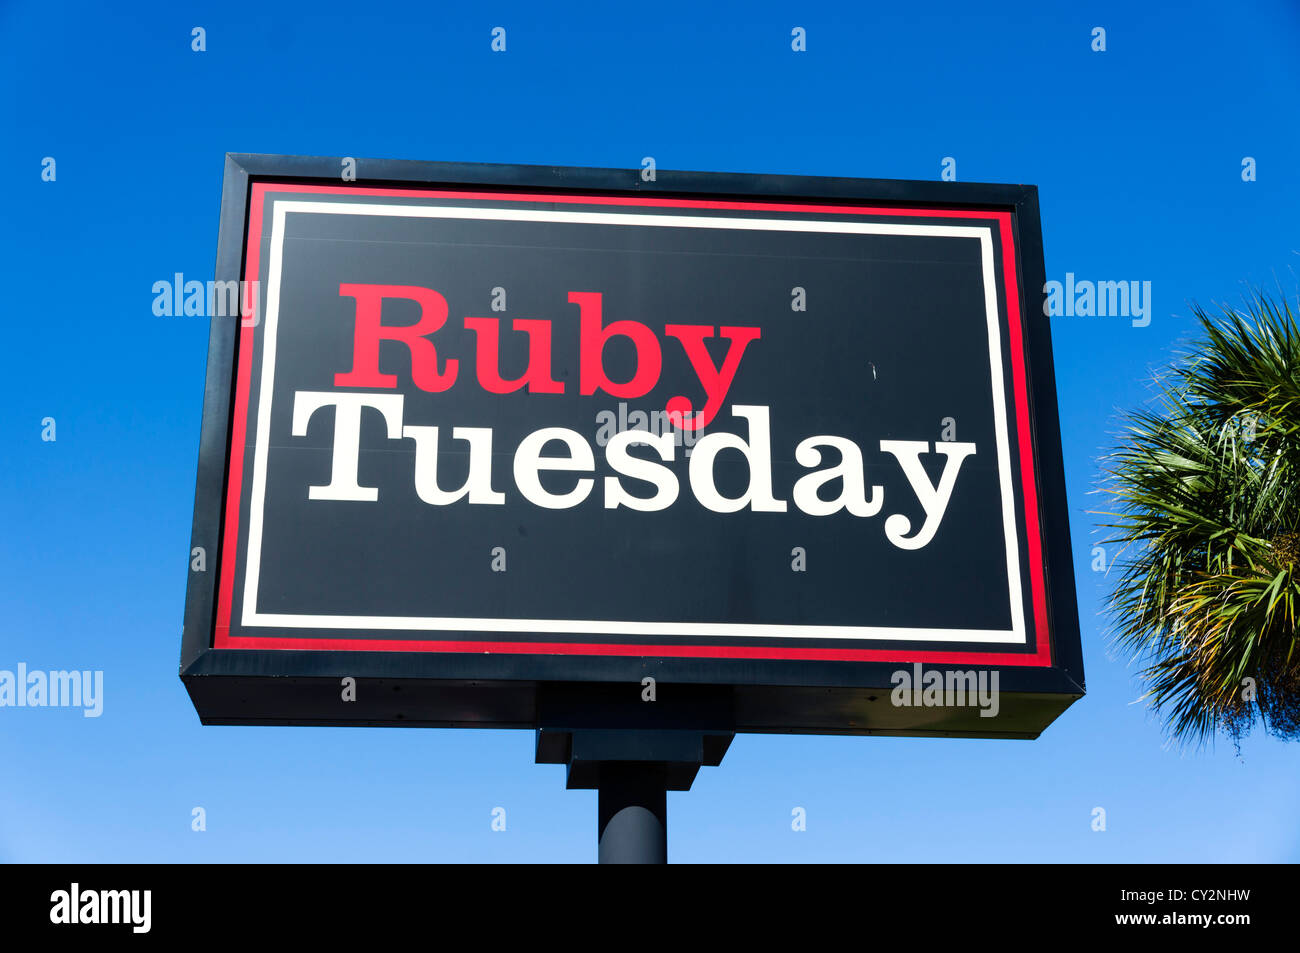 Ruby Tuesday restaurant sign, Central Florida, USA Stock Photo